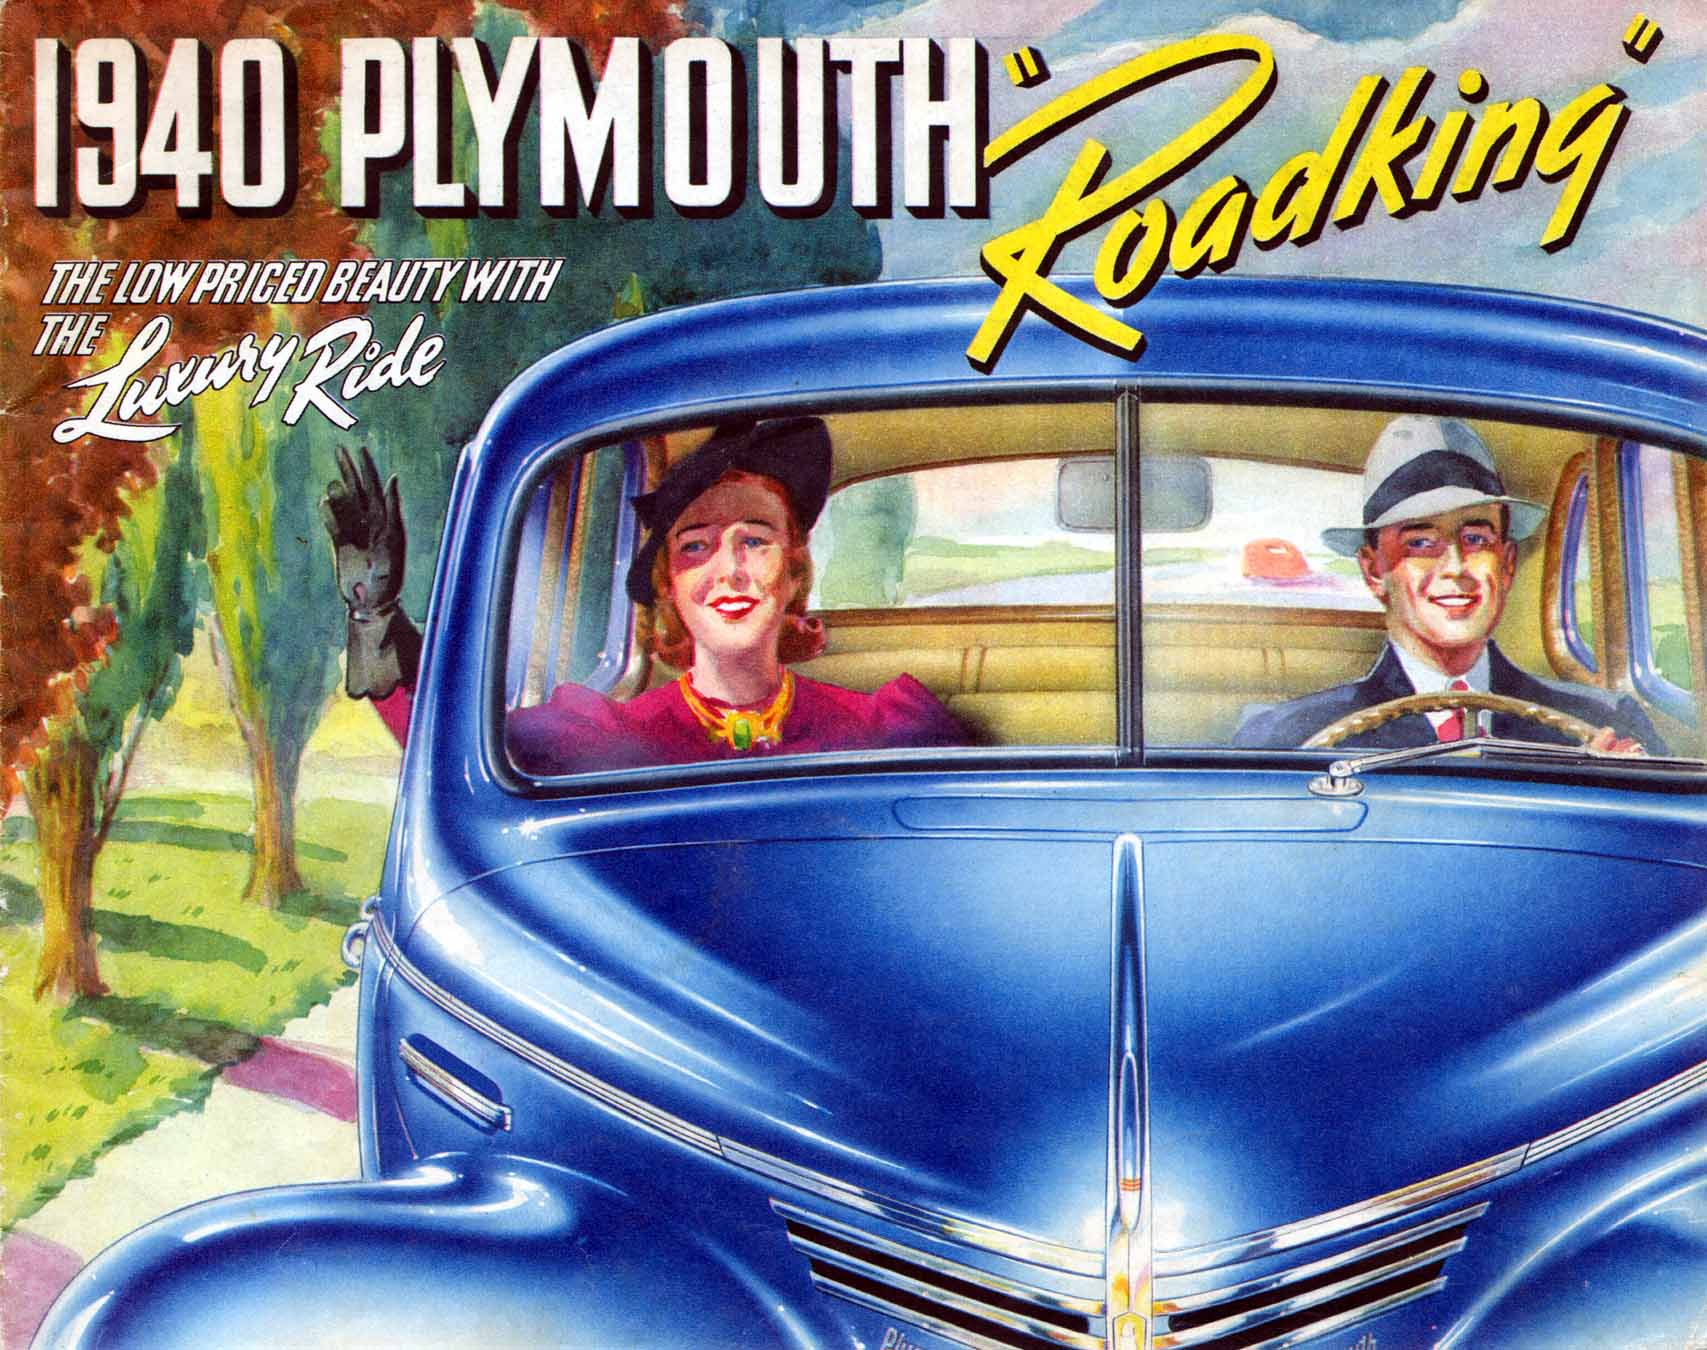 1940_Plymouth_Roadking-01